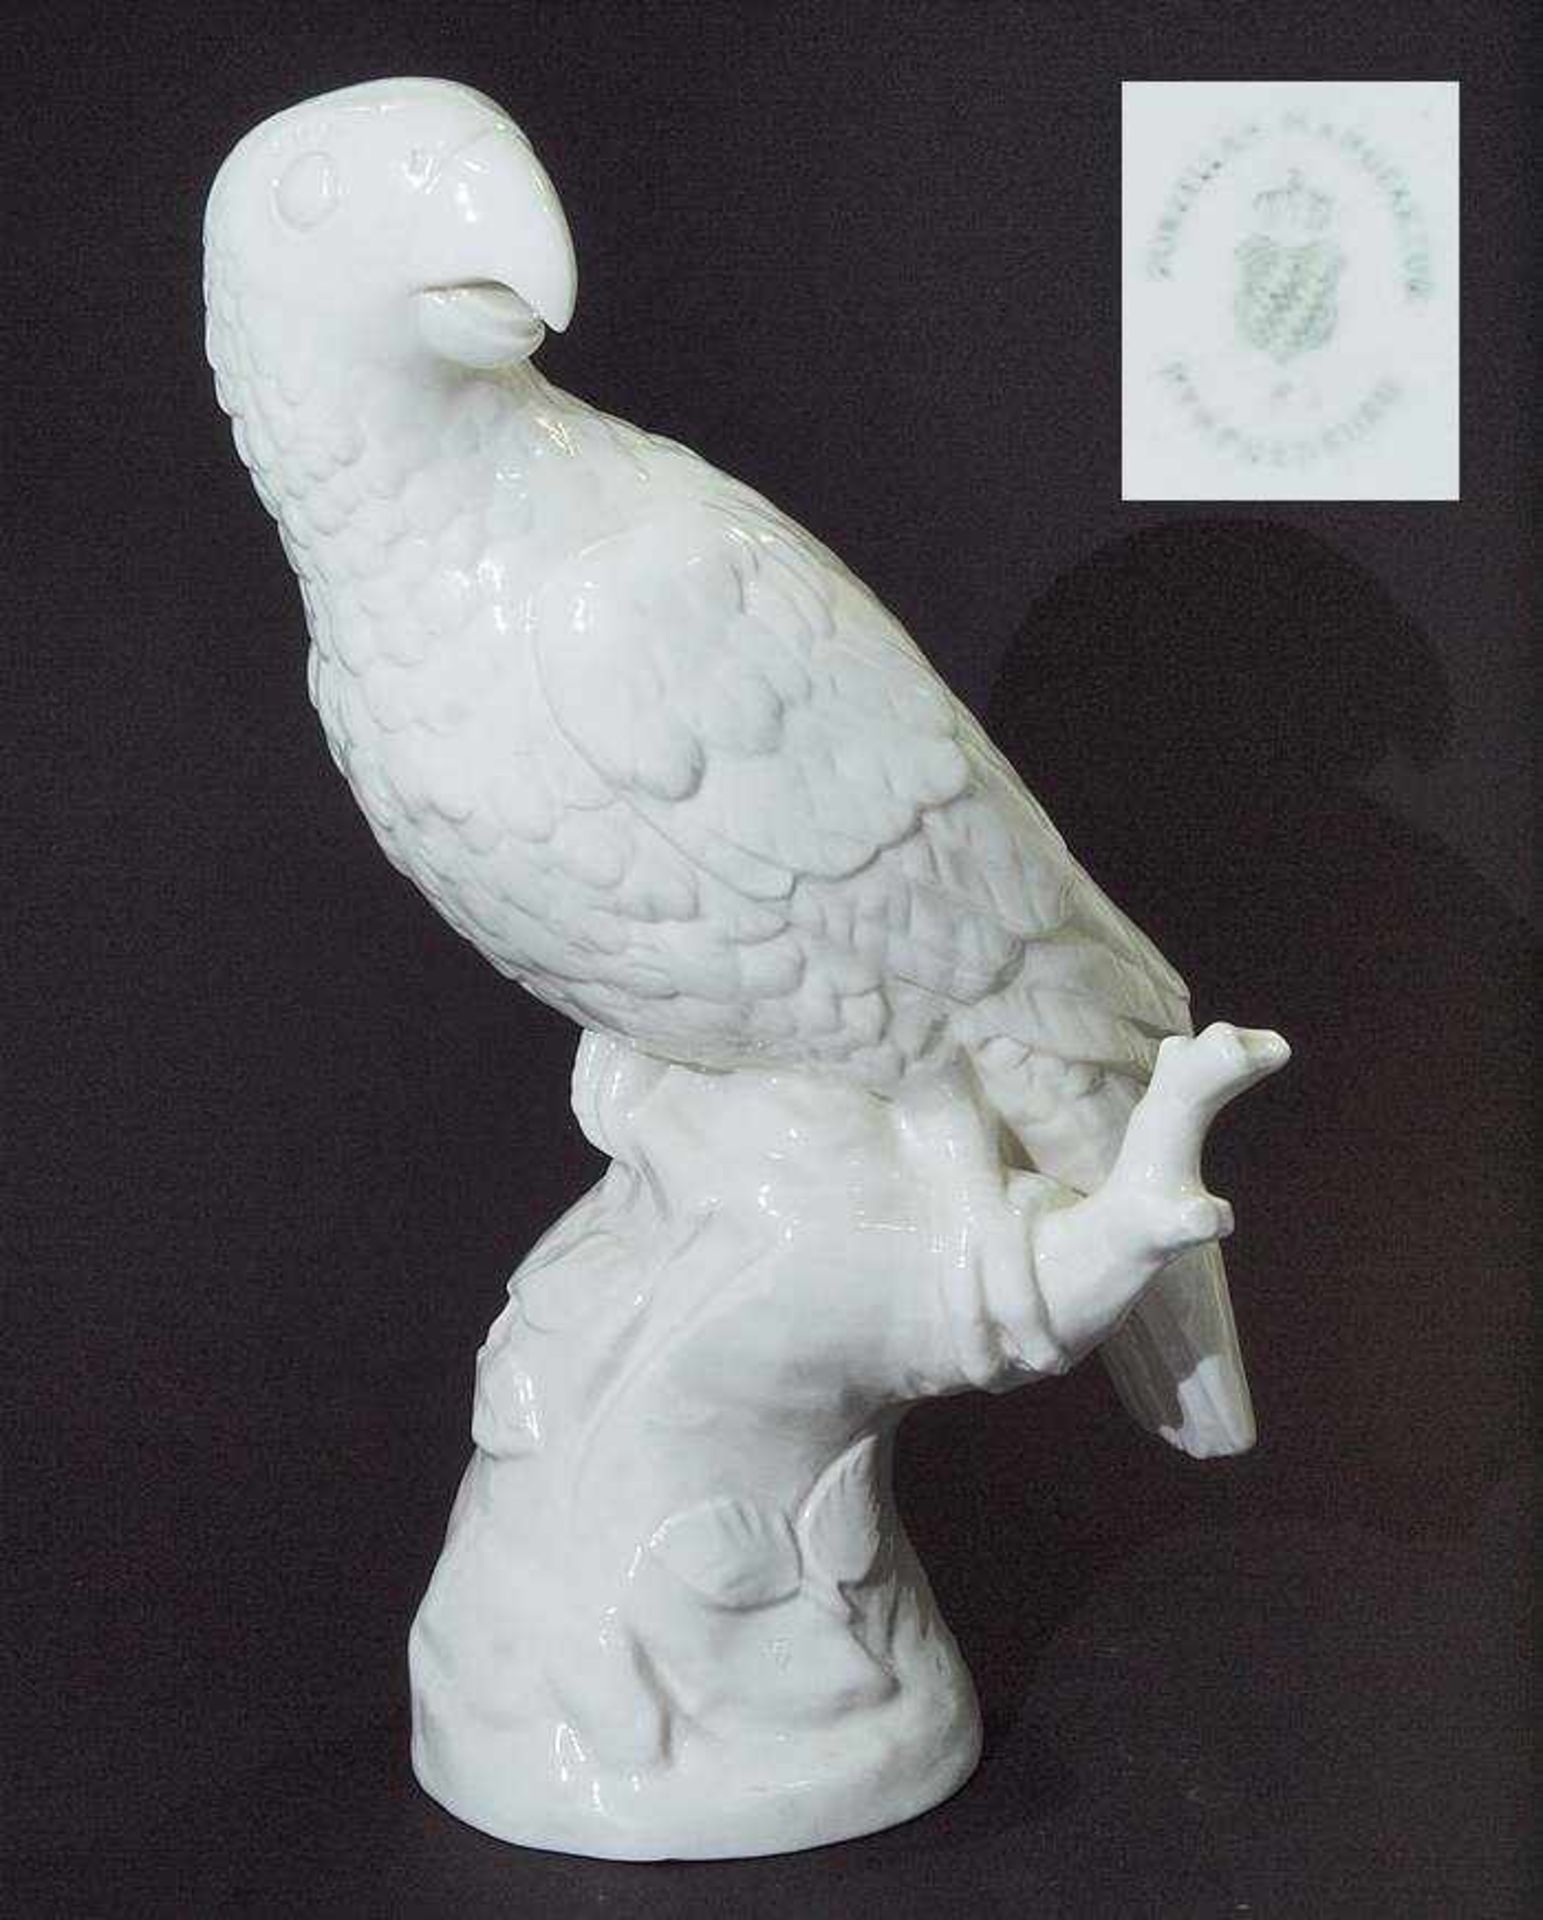 Papagei auf Natursockel. Papagei auf Natursockel. NYMPHENBURG Marke 1997. Modell Nr. 180.